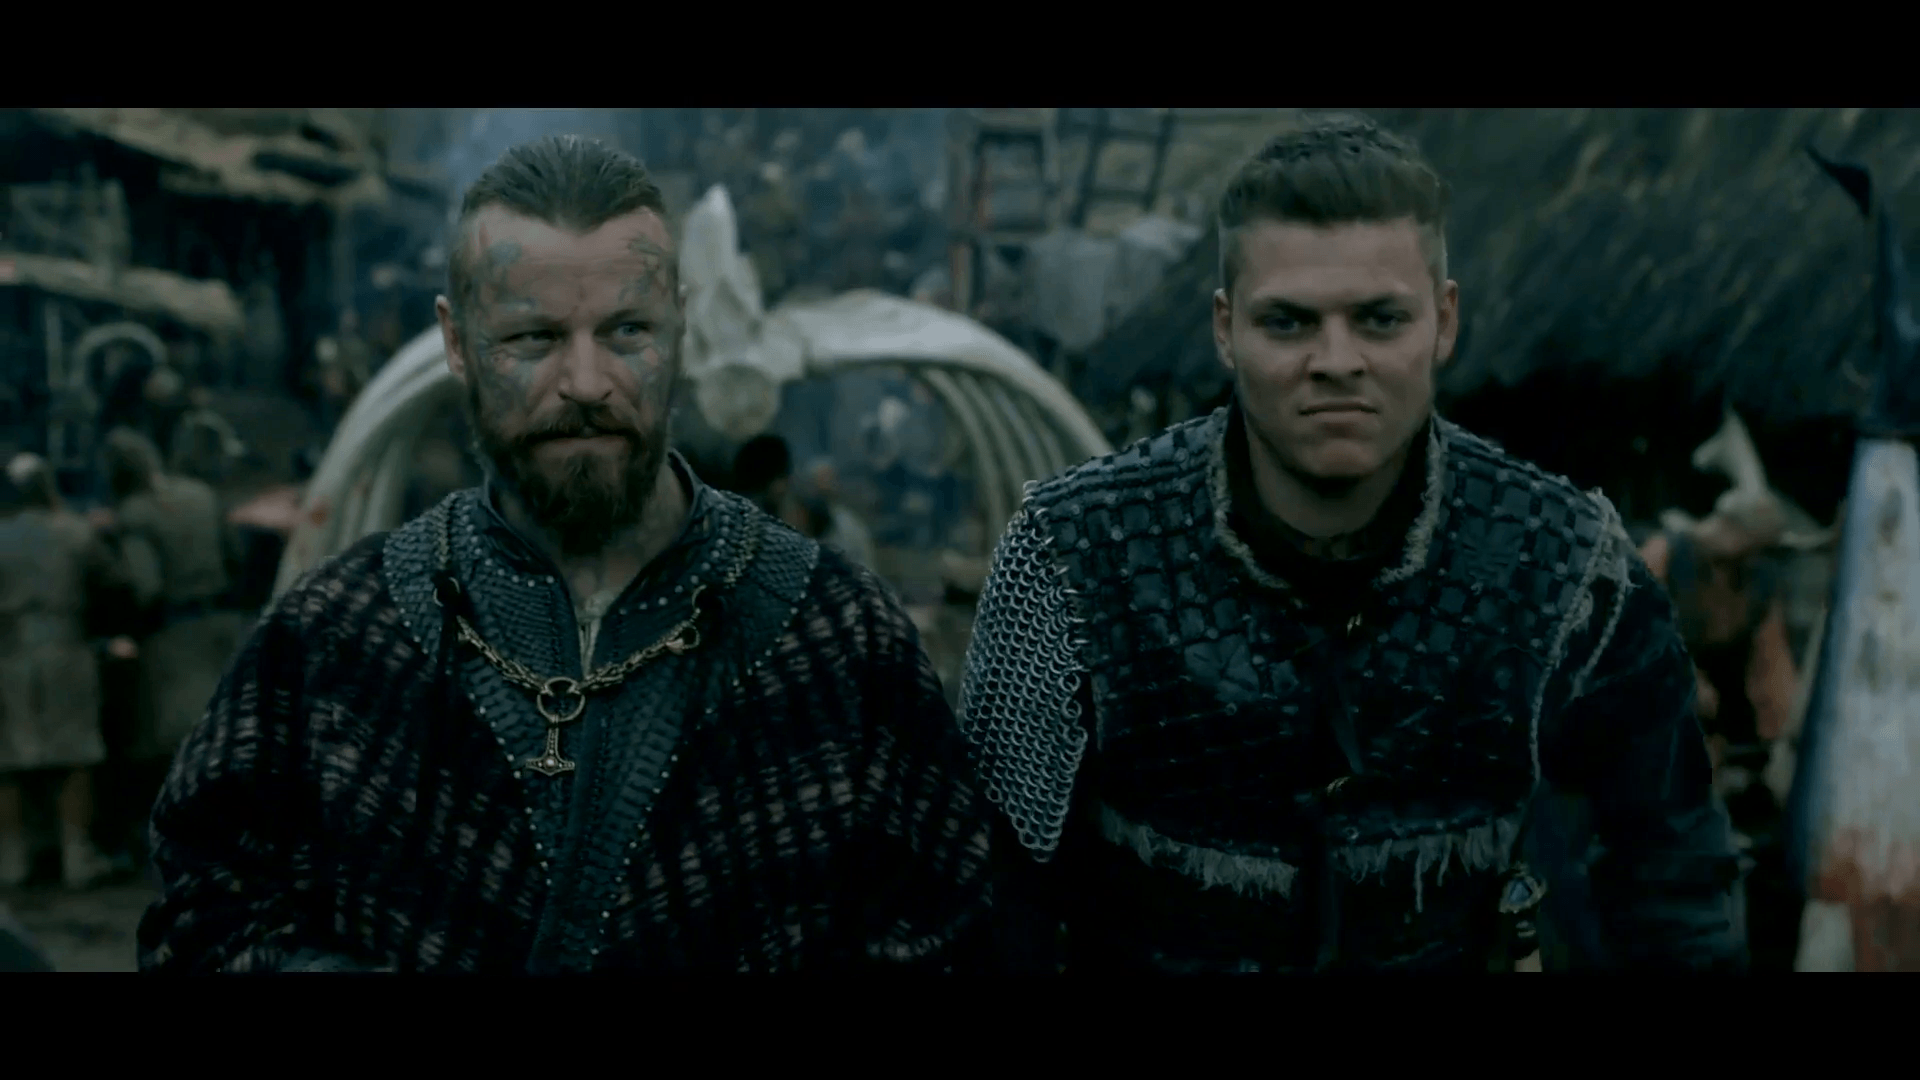 Vikings season 5 episode 6 review: Will Ivar, Harald's alliance be